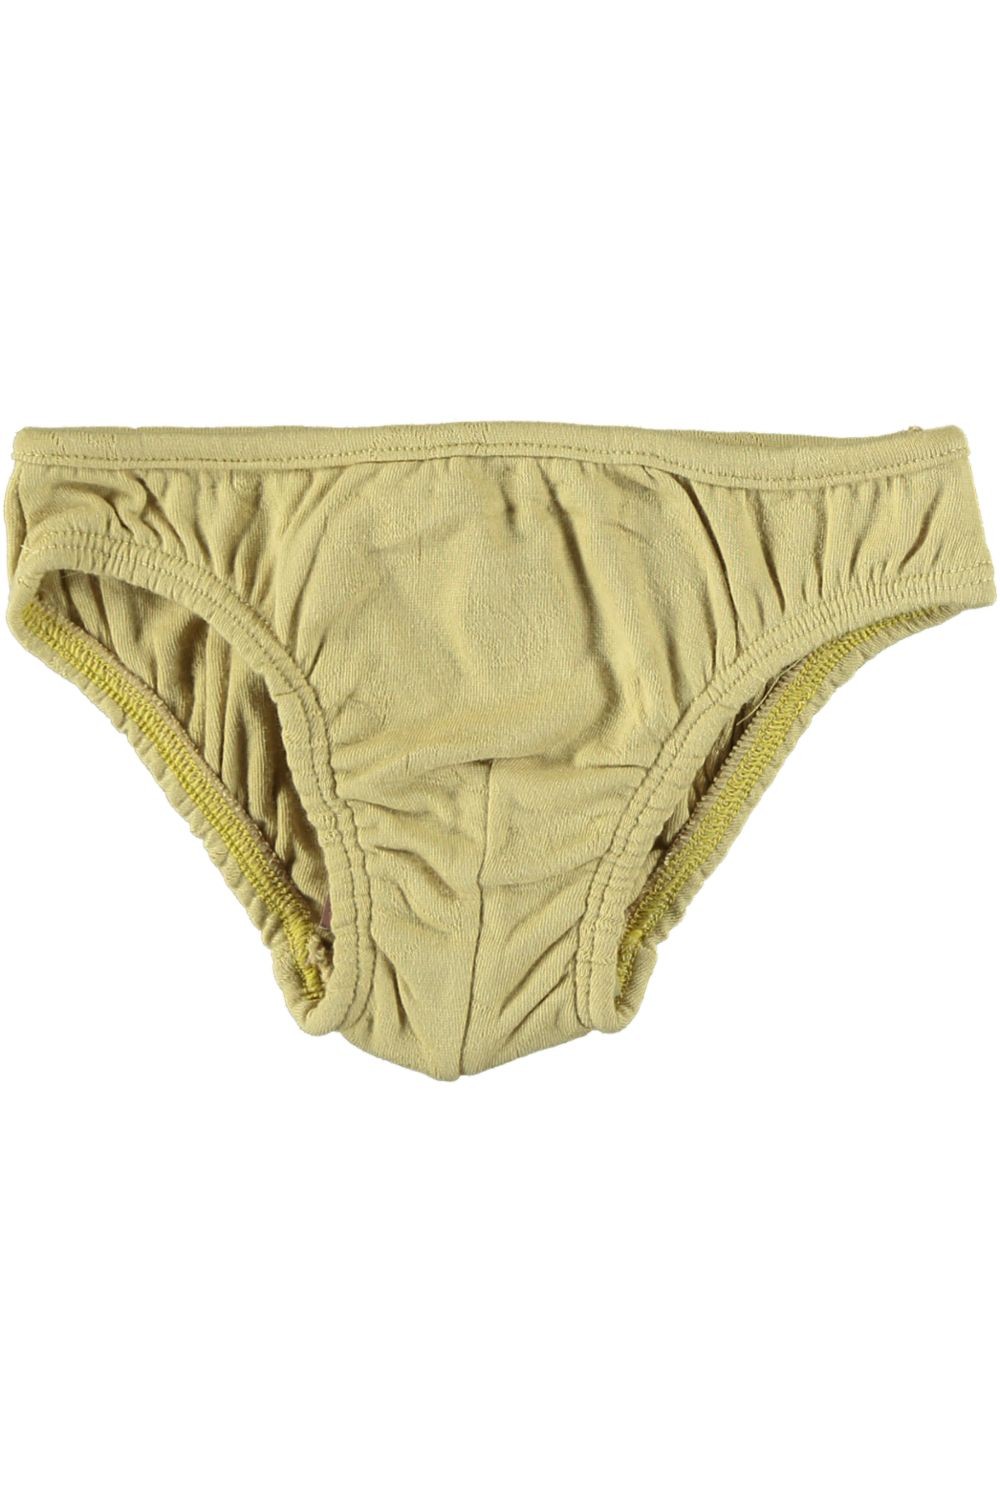 Underwear mayo boys briefs 100% organic cotton for boys 3-14 years by  Risu-Risu - Risu-Risu